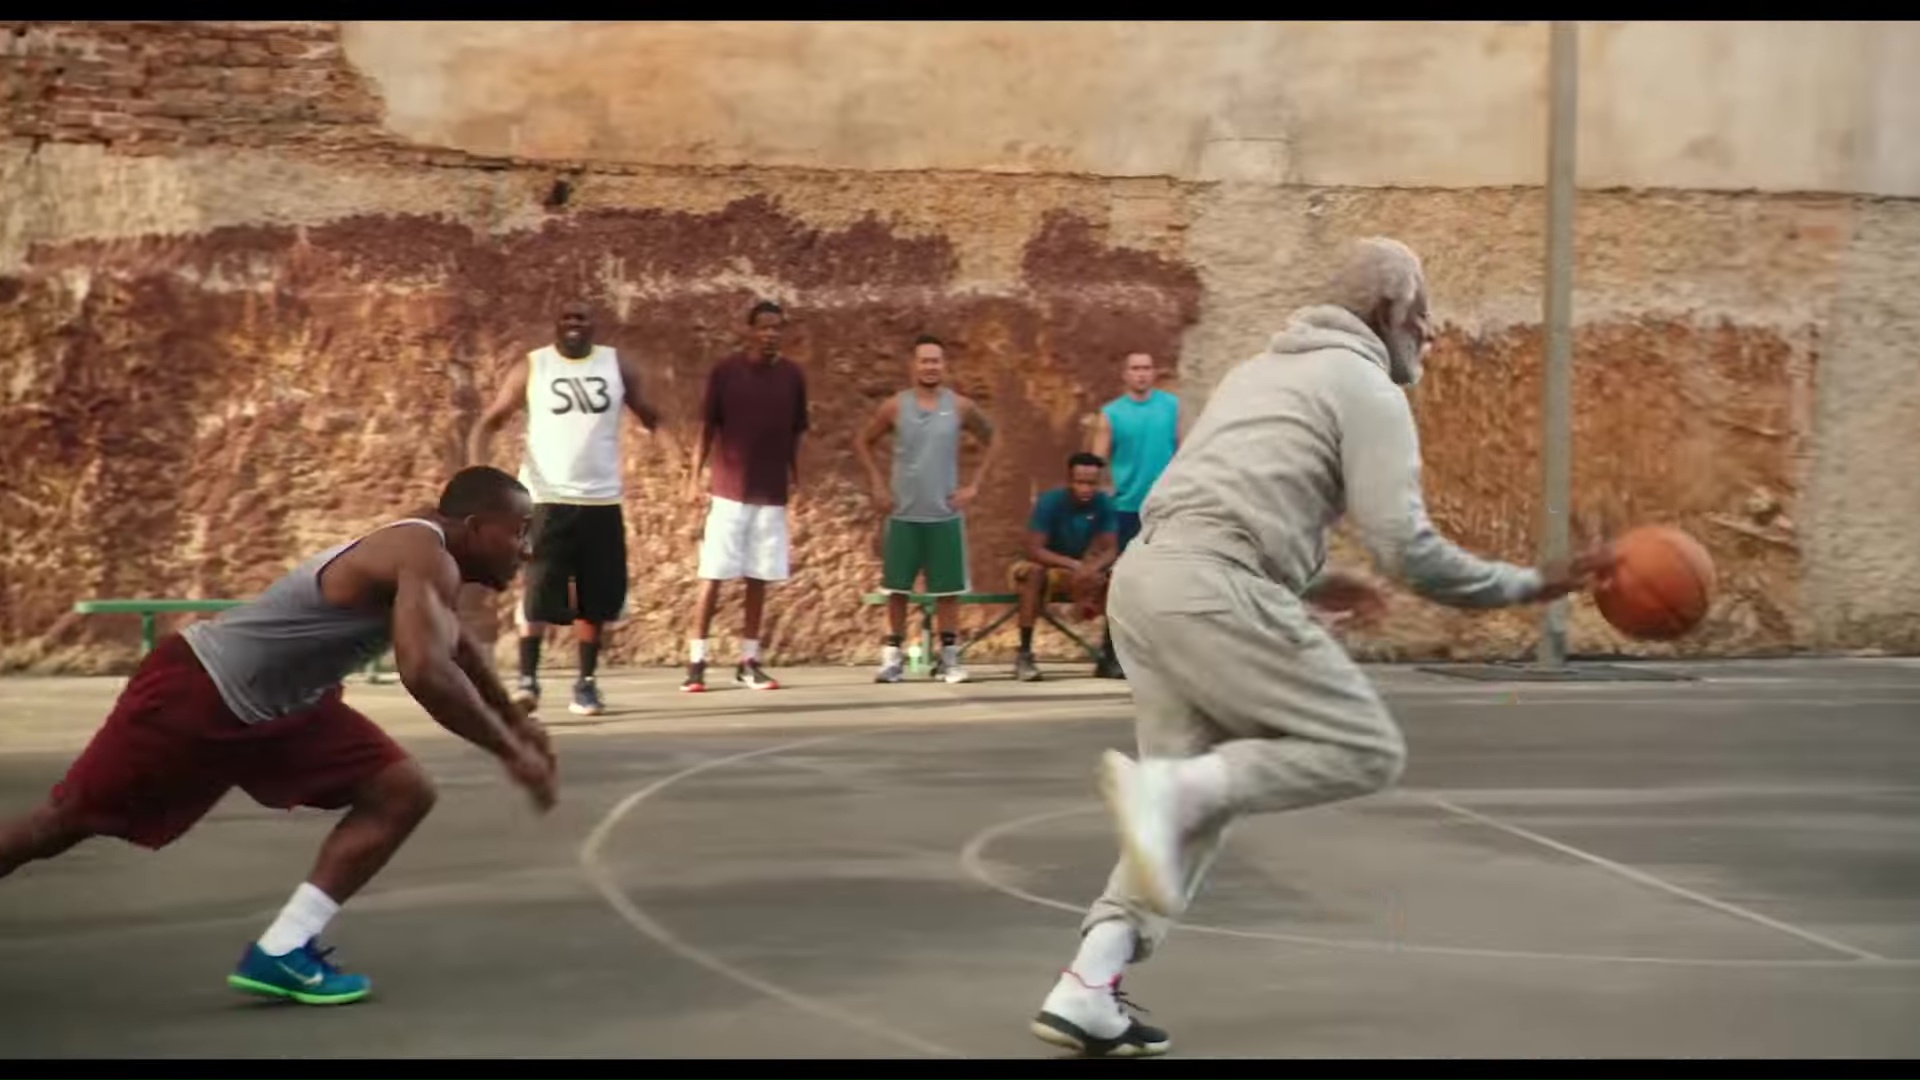 Nike Sneakers For Men (Blue) in Uncle Drew (2018) Movie